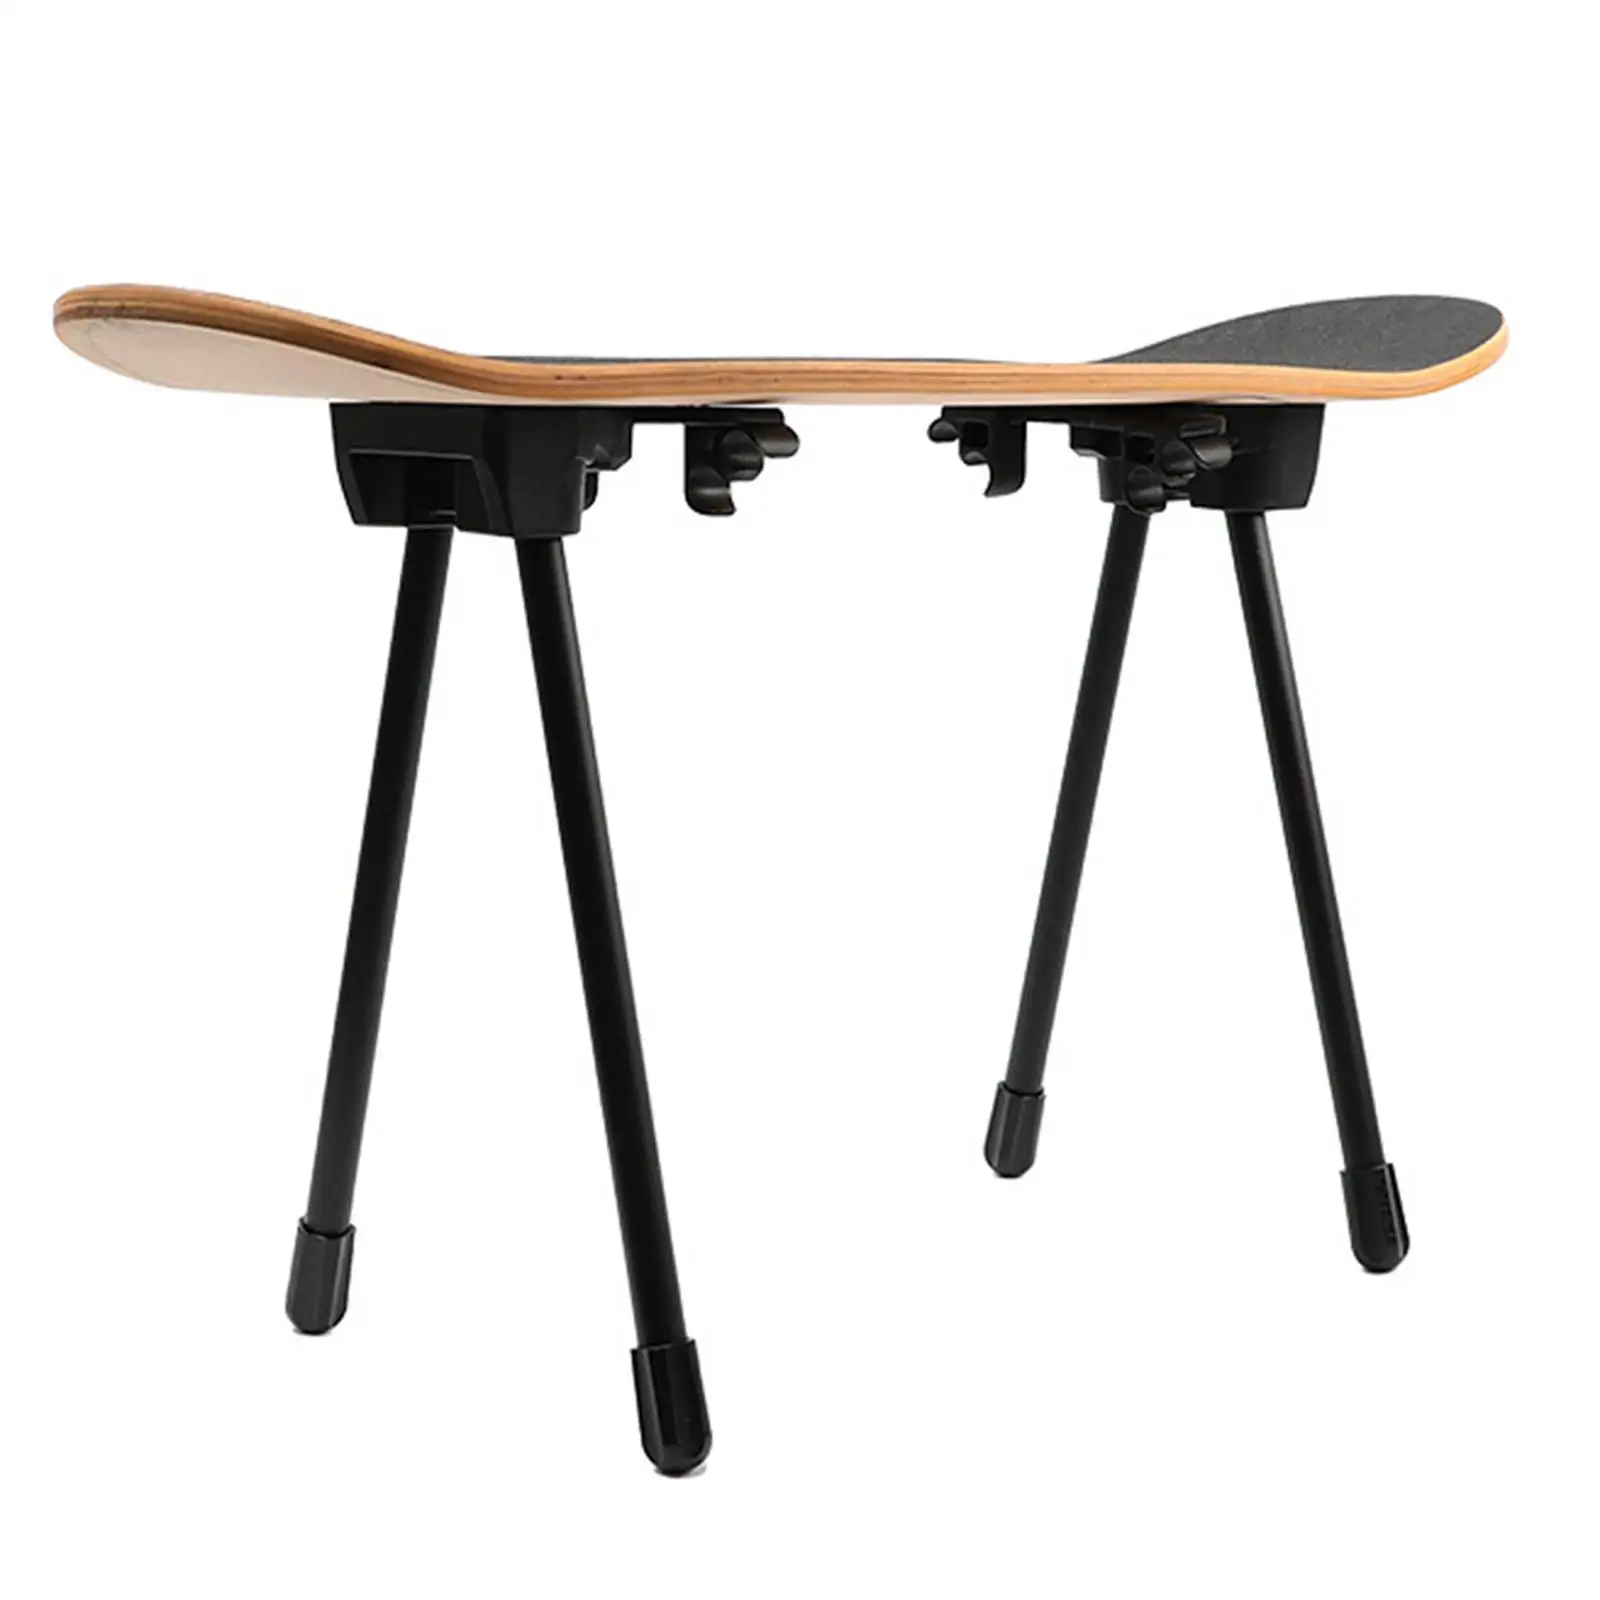 1 Pair of Camping Table Skateboard Foot Skateboard Bracket DIY Table Foot Coffee Table Leg Folding Table Leg Outdoor Travel